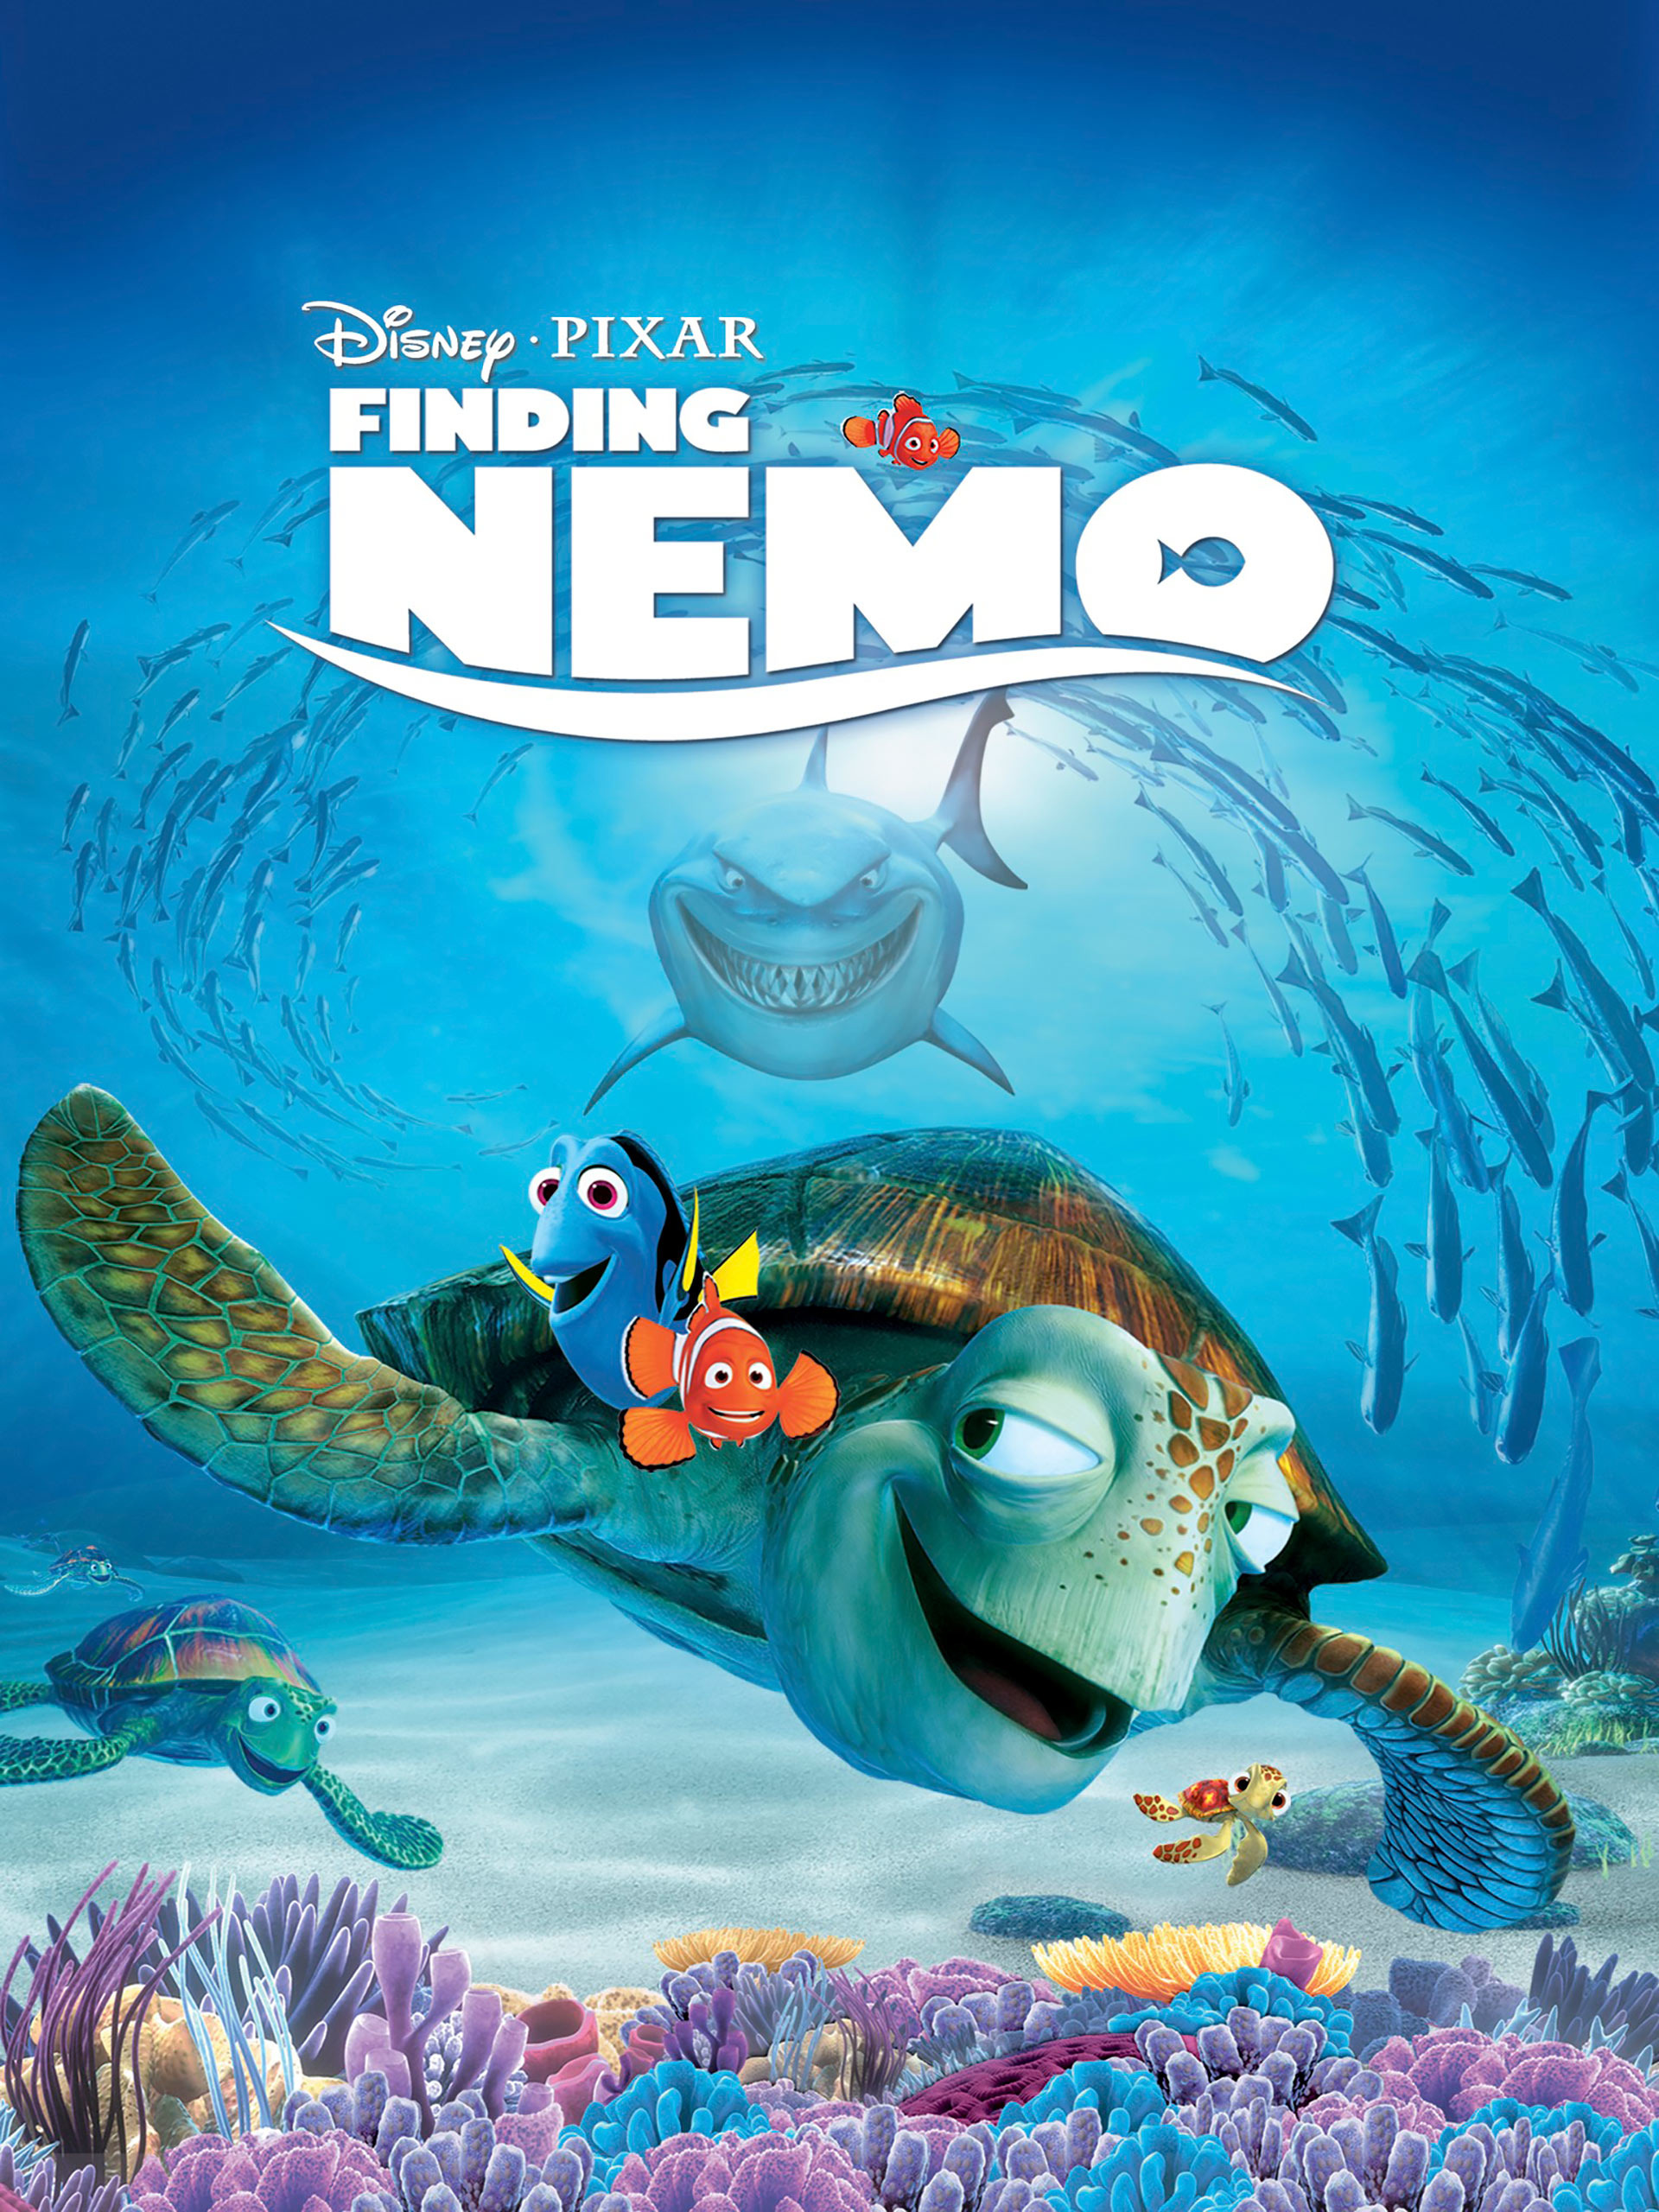 Stiahni si Filmy Kreslené Hleda se Nemo/Finding Nemo (2003)(CZ/EN)[1080p] = CSFD 86%